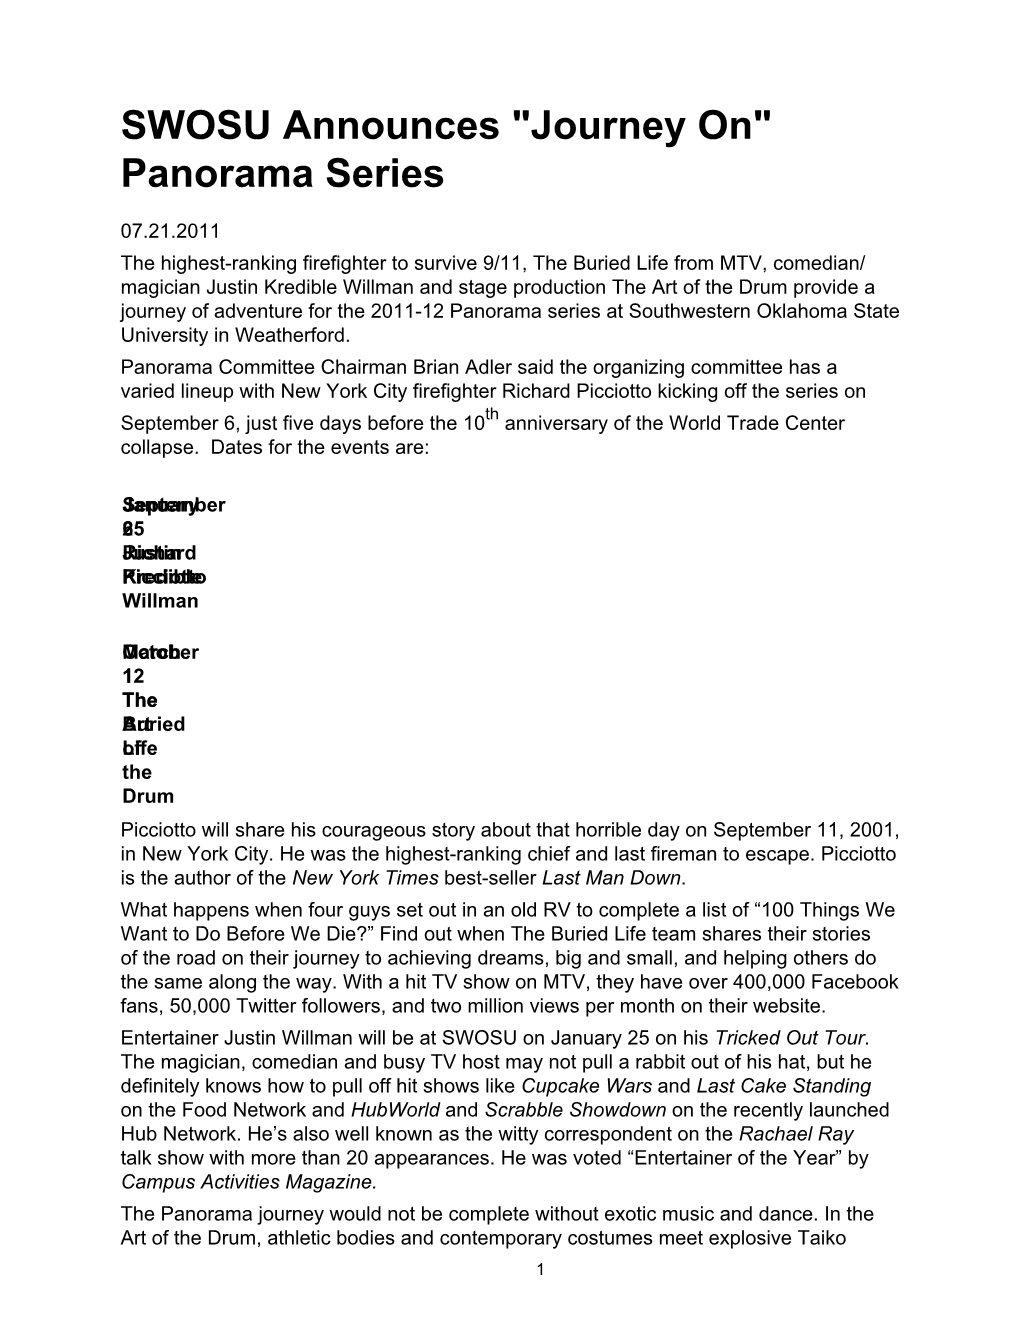 07-21-2011 SWOSU Announces "Journey On" Panorama Series